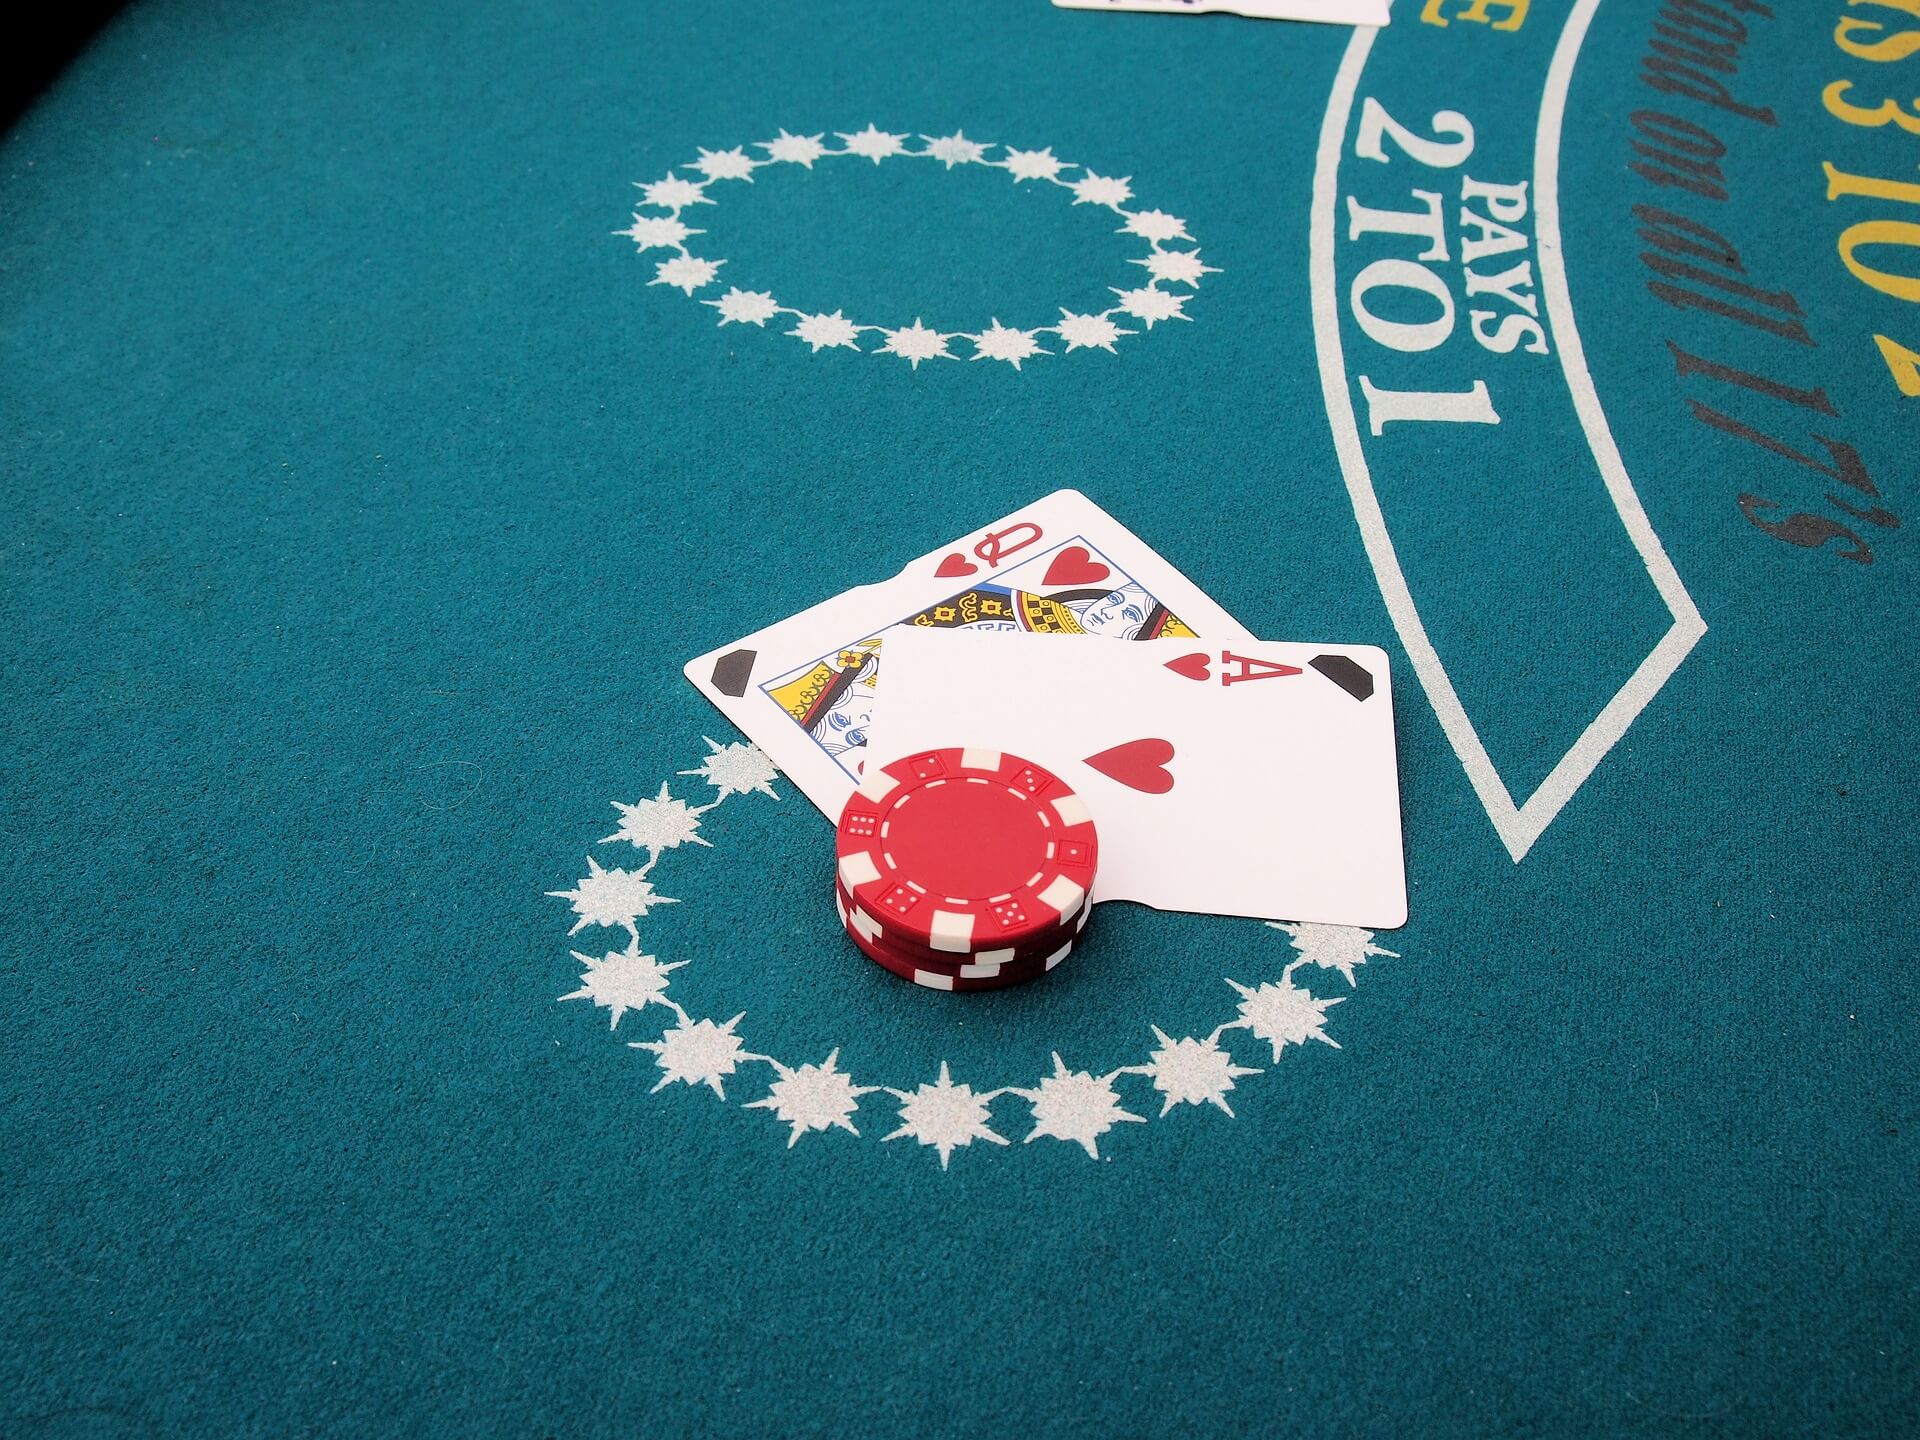 Blackjack en casino